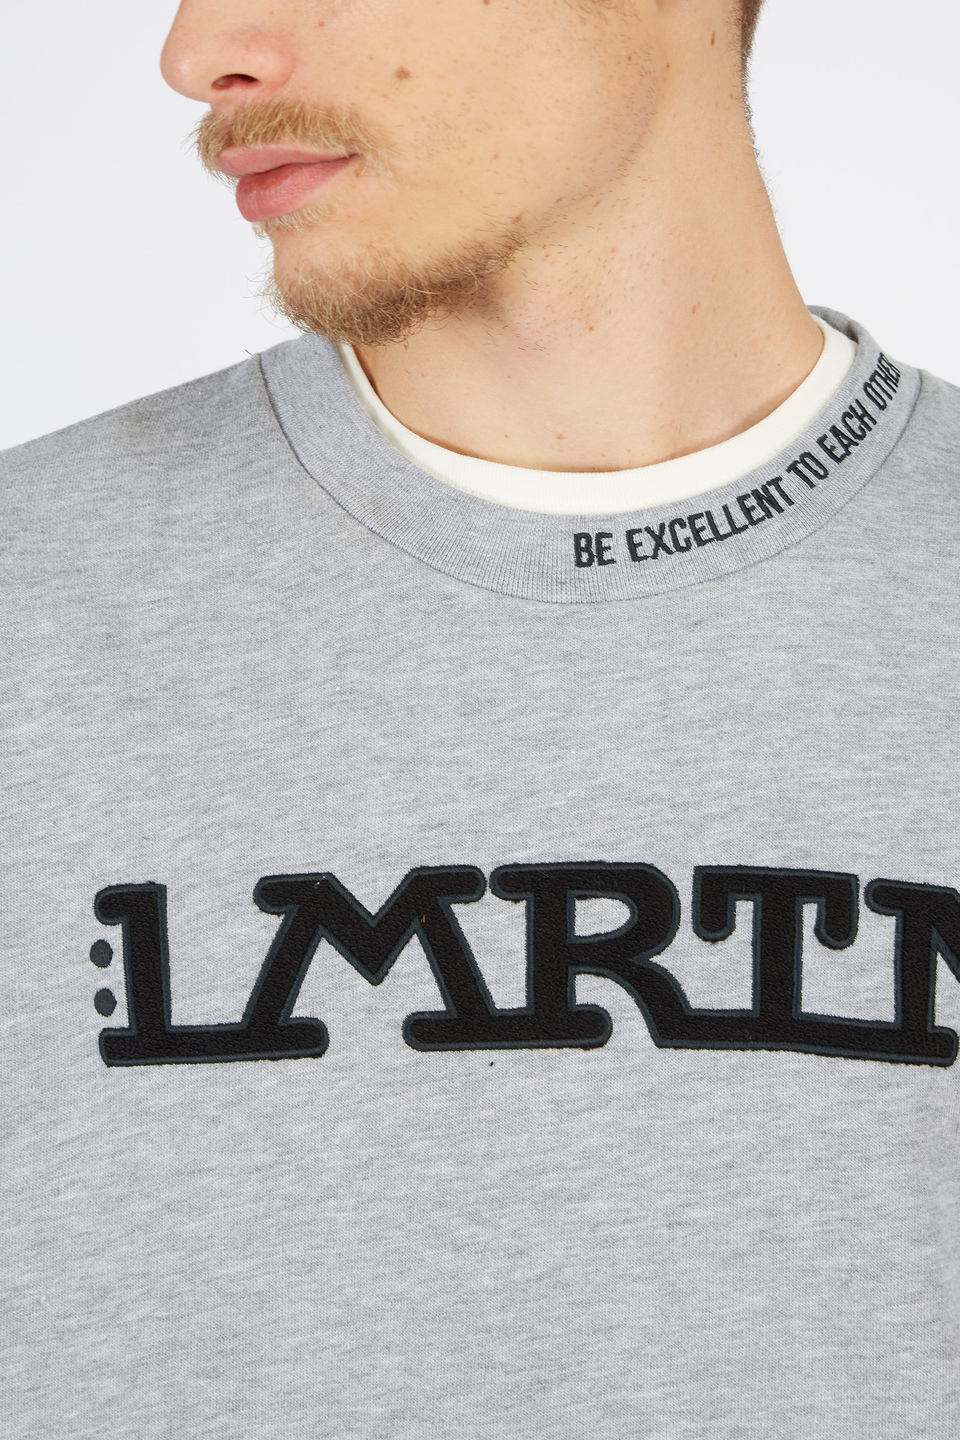 Men's oversized long-sleeved cotton blend sweatshirt | La Martina - Official Online Shop